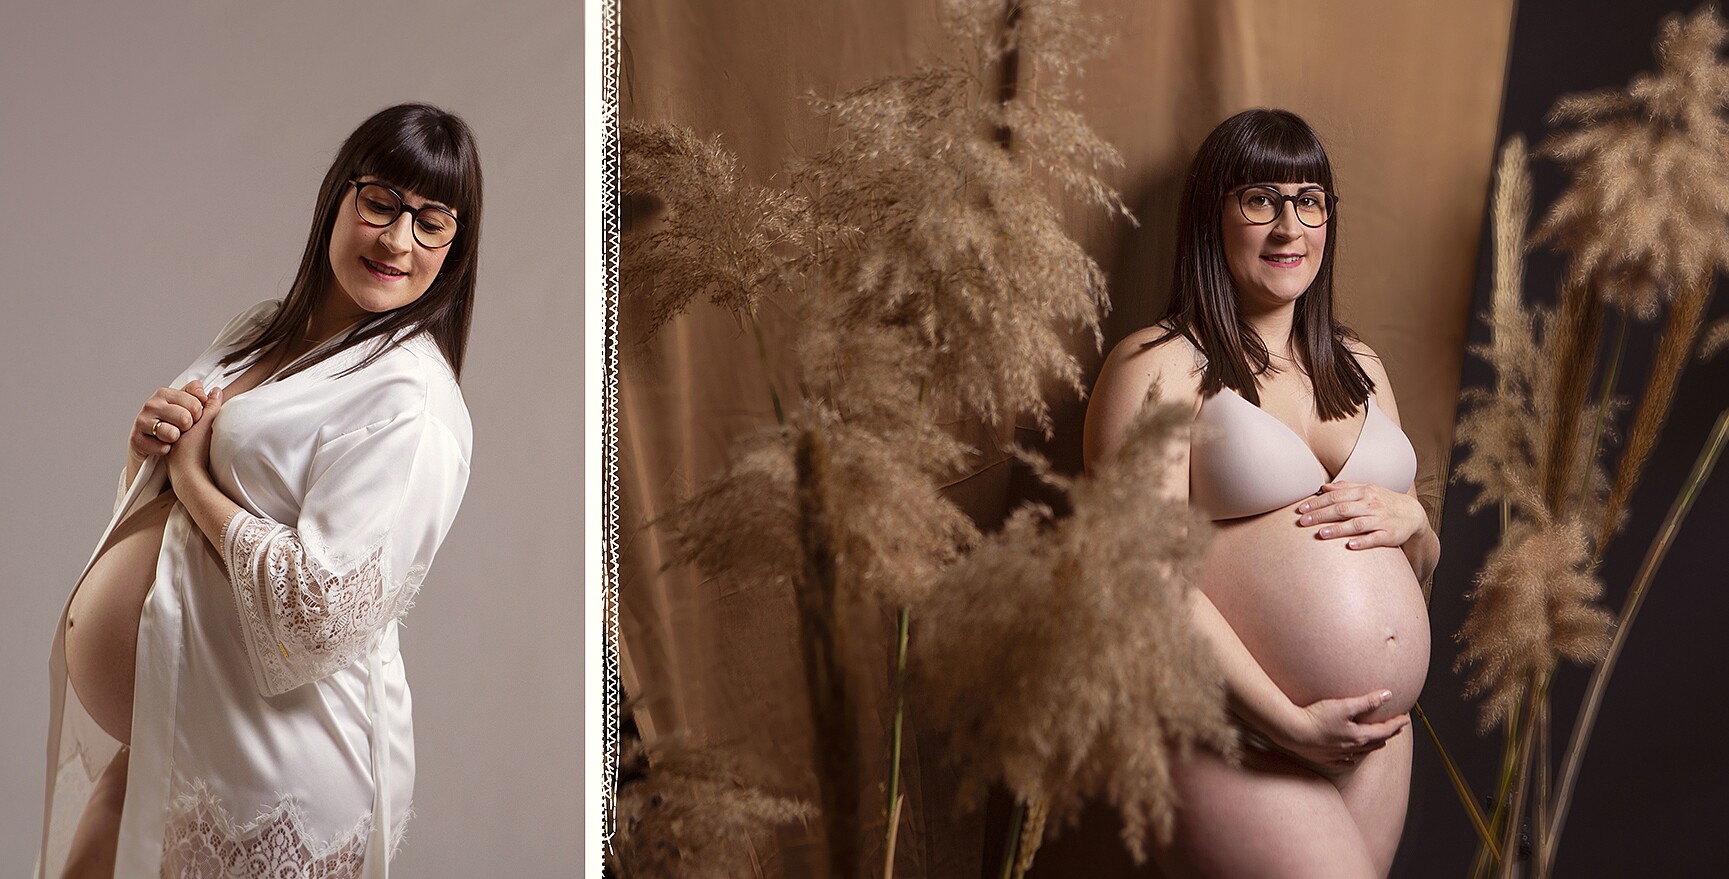 fotografo-maternidad-embarazo-bebe-newborn-murcia002